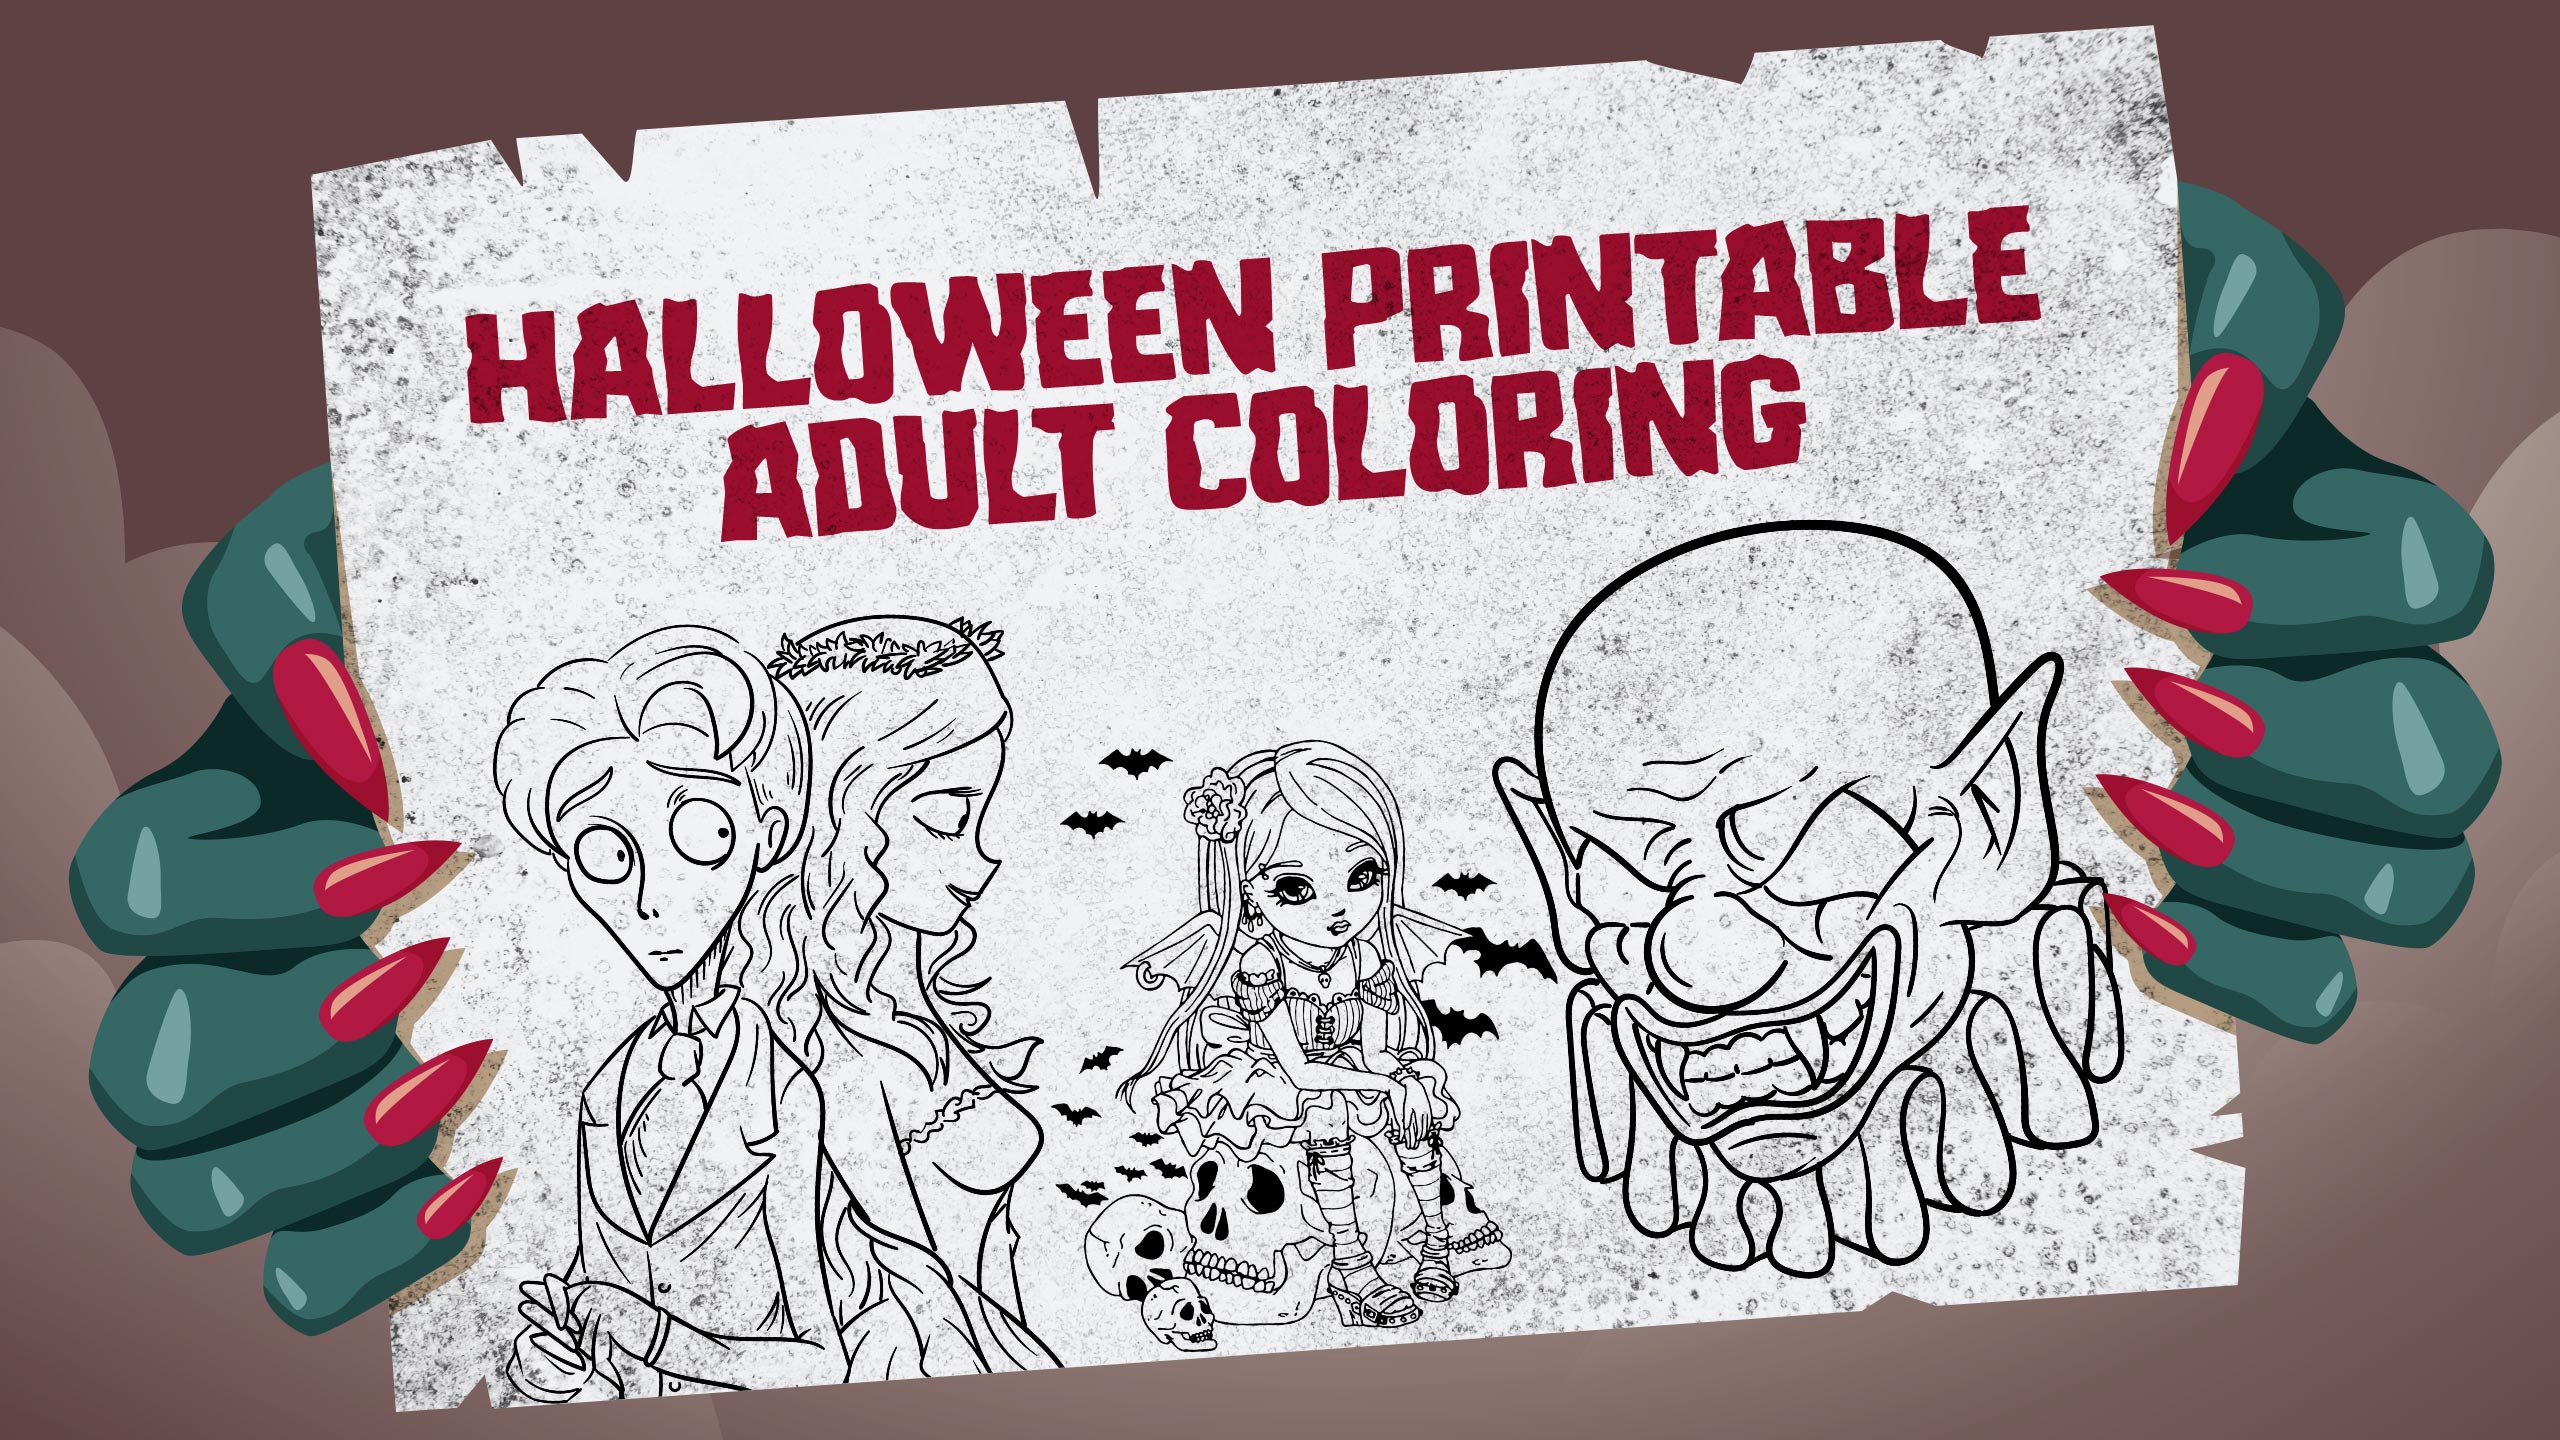 Halloween Printable Adult Coloring